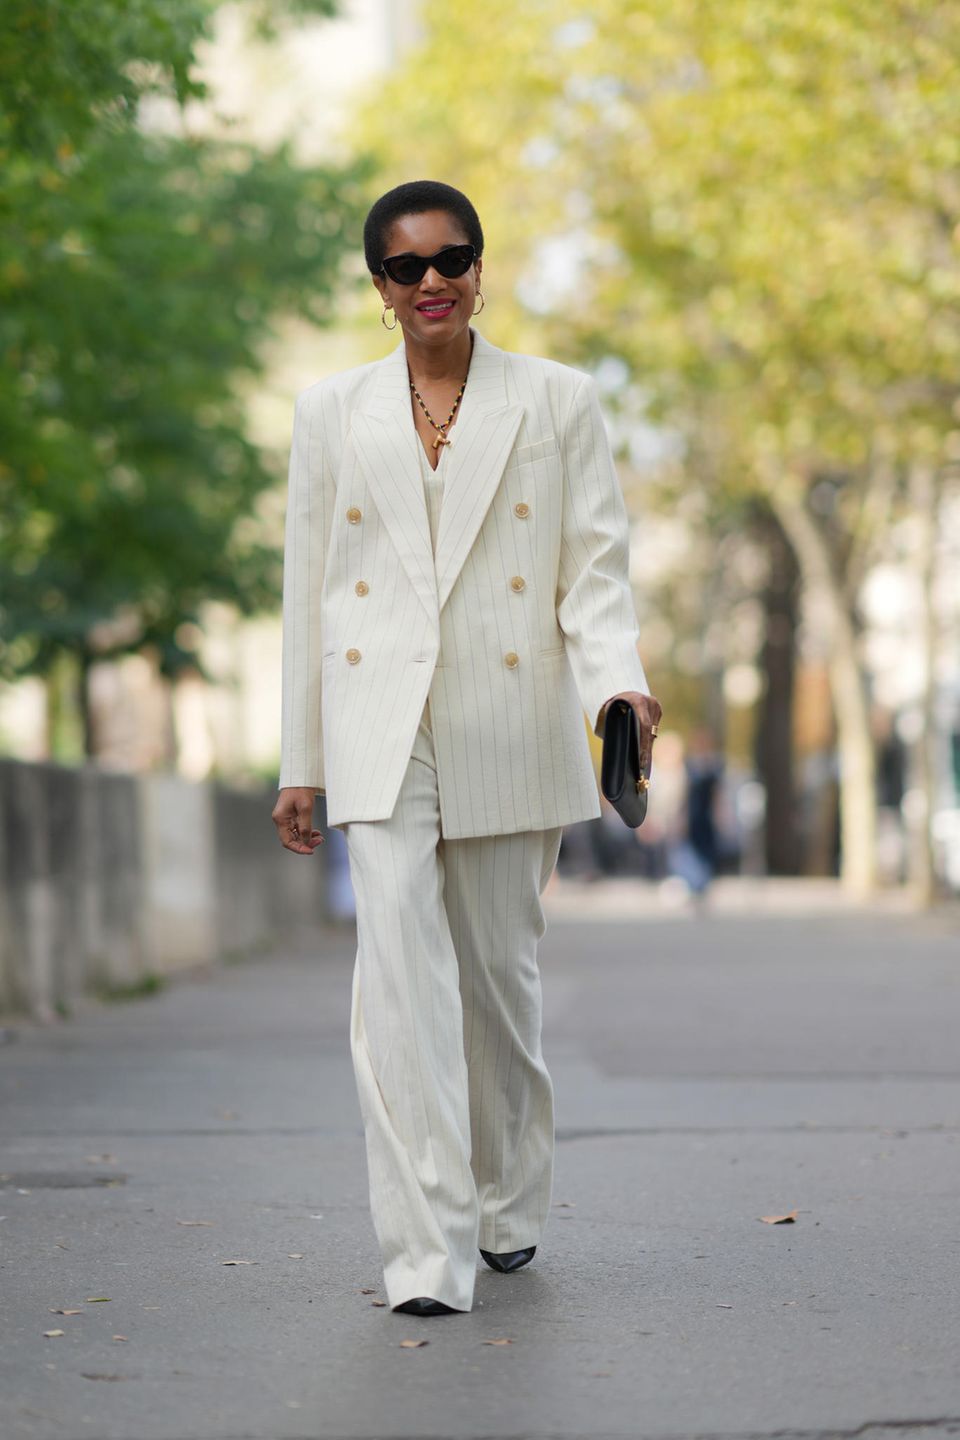 Business, feminine + oversized: 3 ways to style a suit